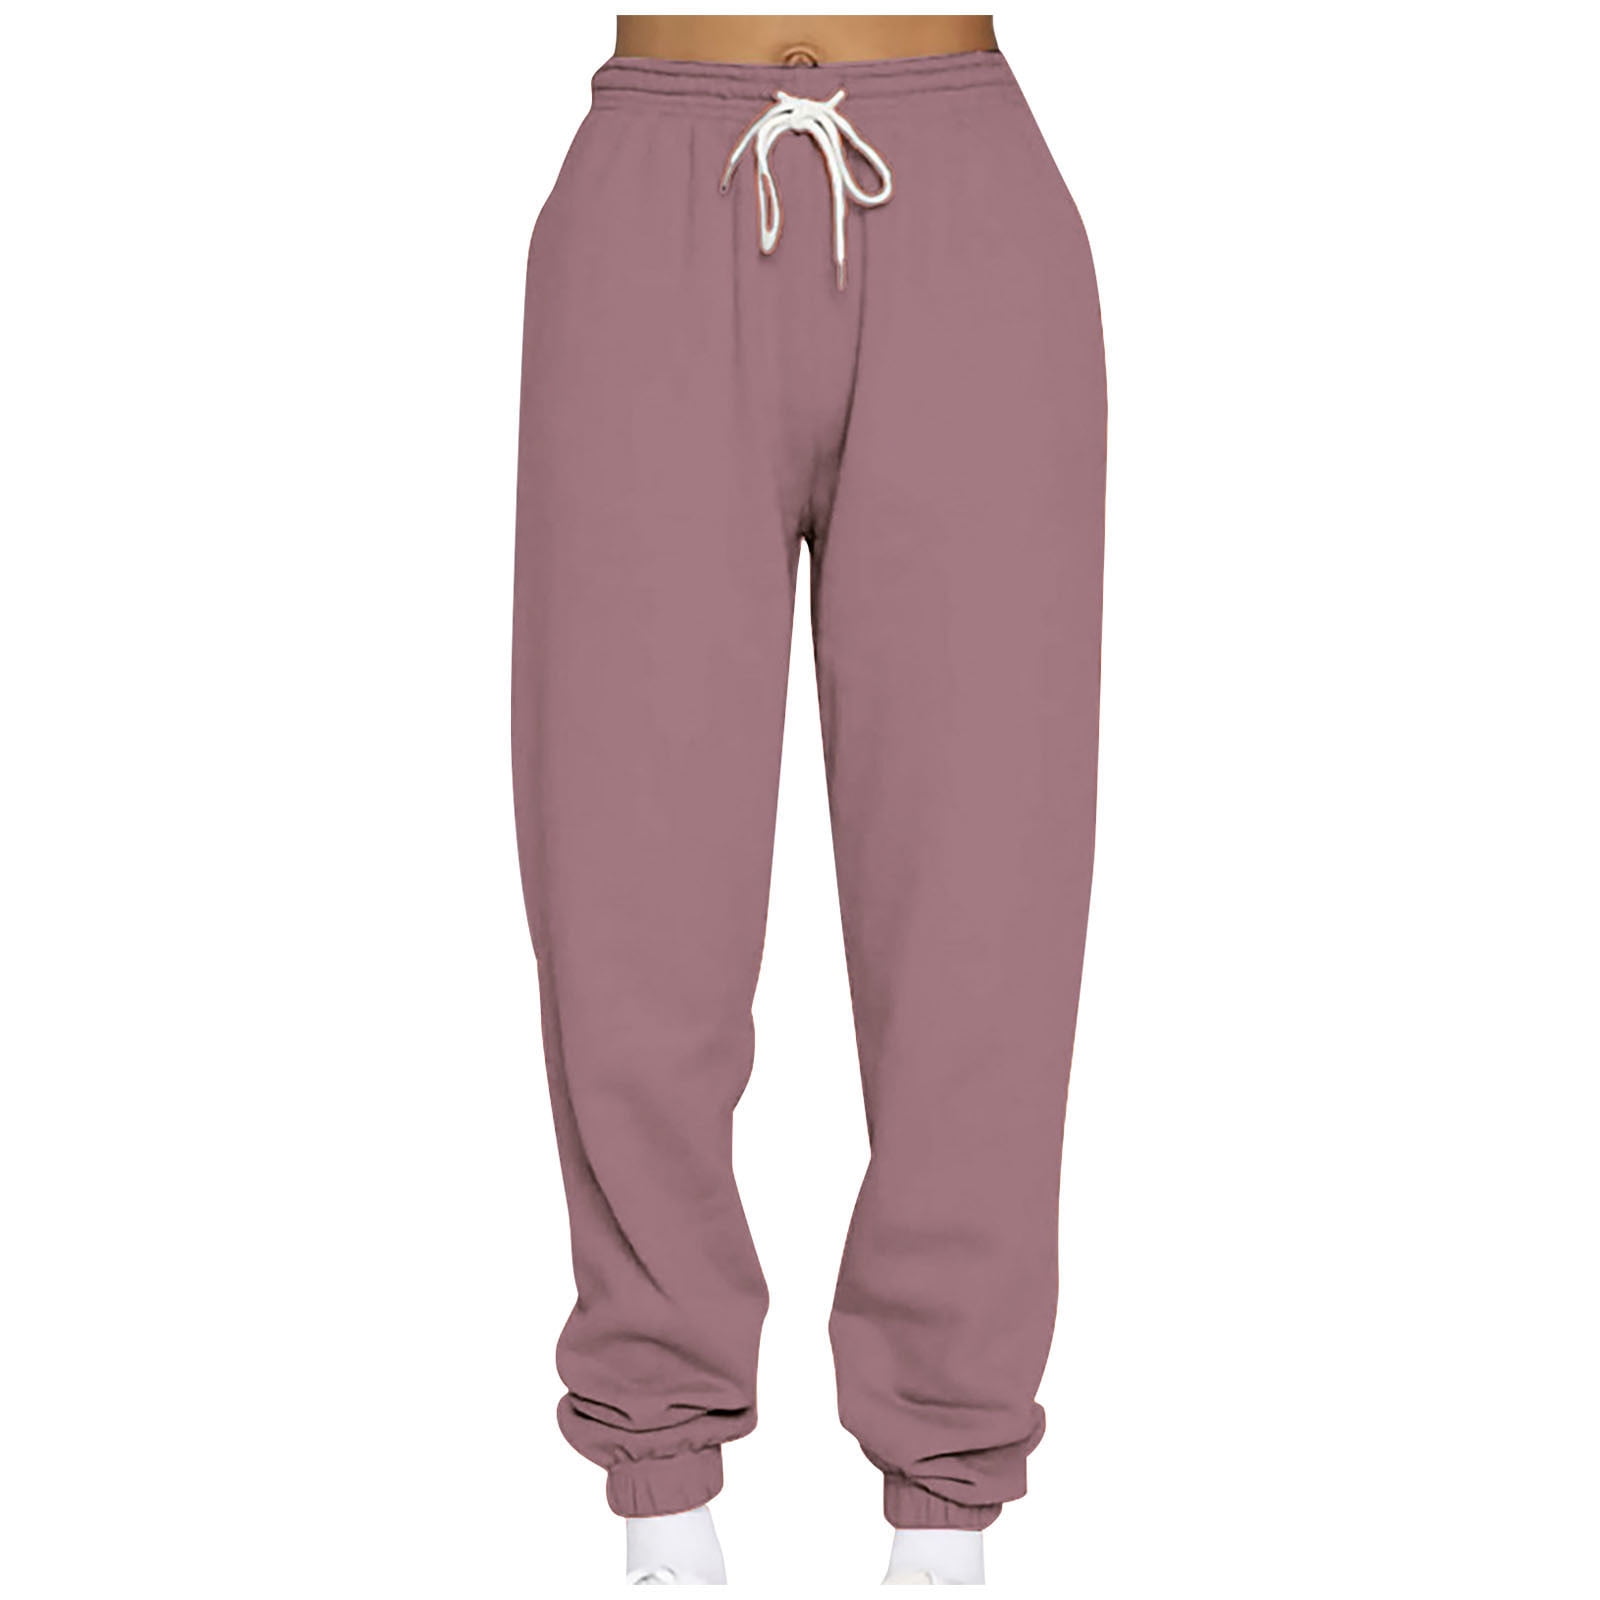 XFLWAM Women's Dark High Waist Cotton Trousers Jogger Sweatpants Loose  Casual Pants Teen Girls Pink M